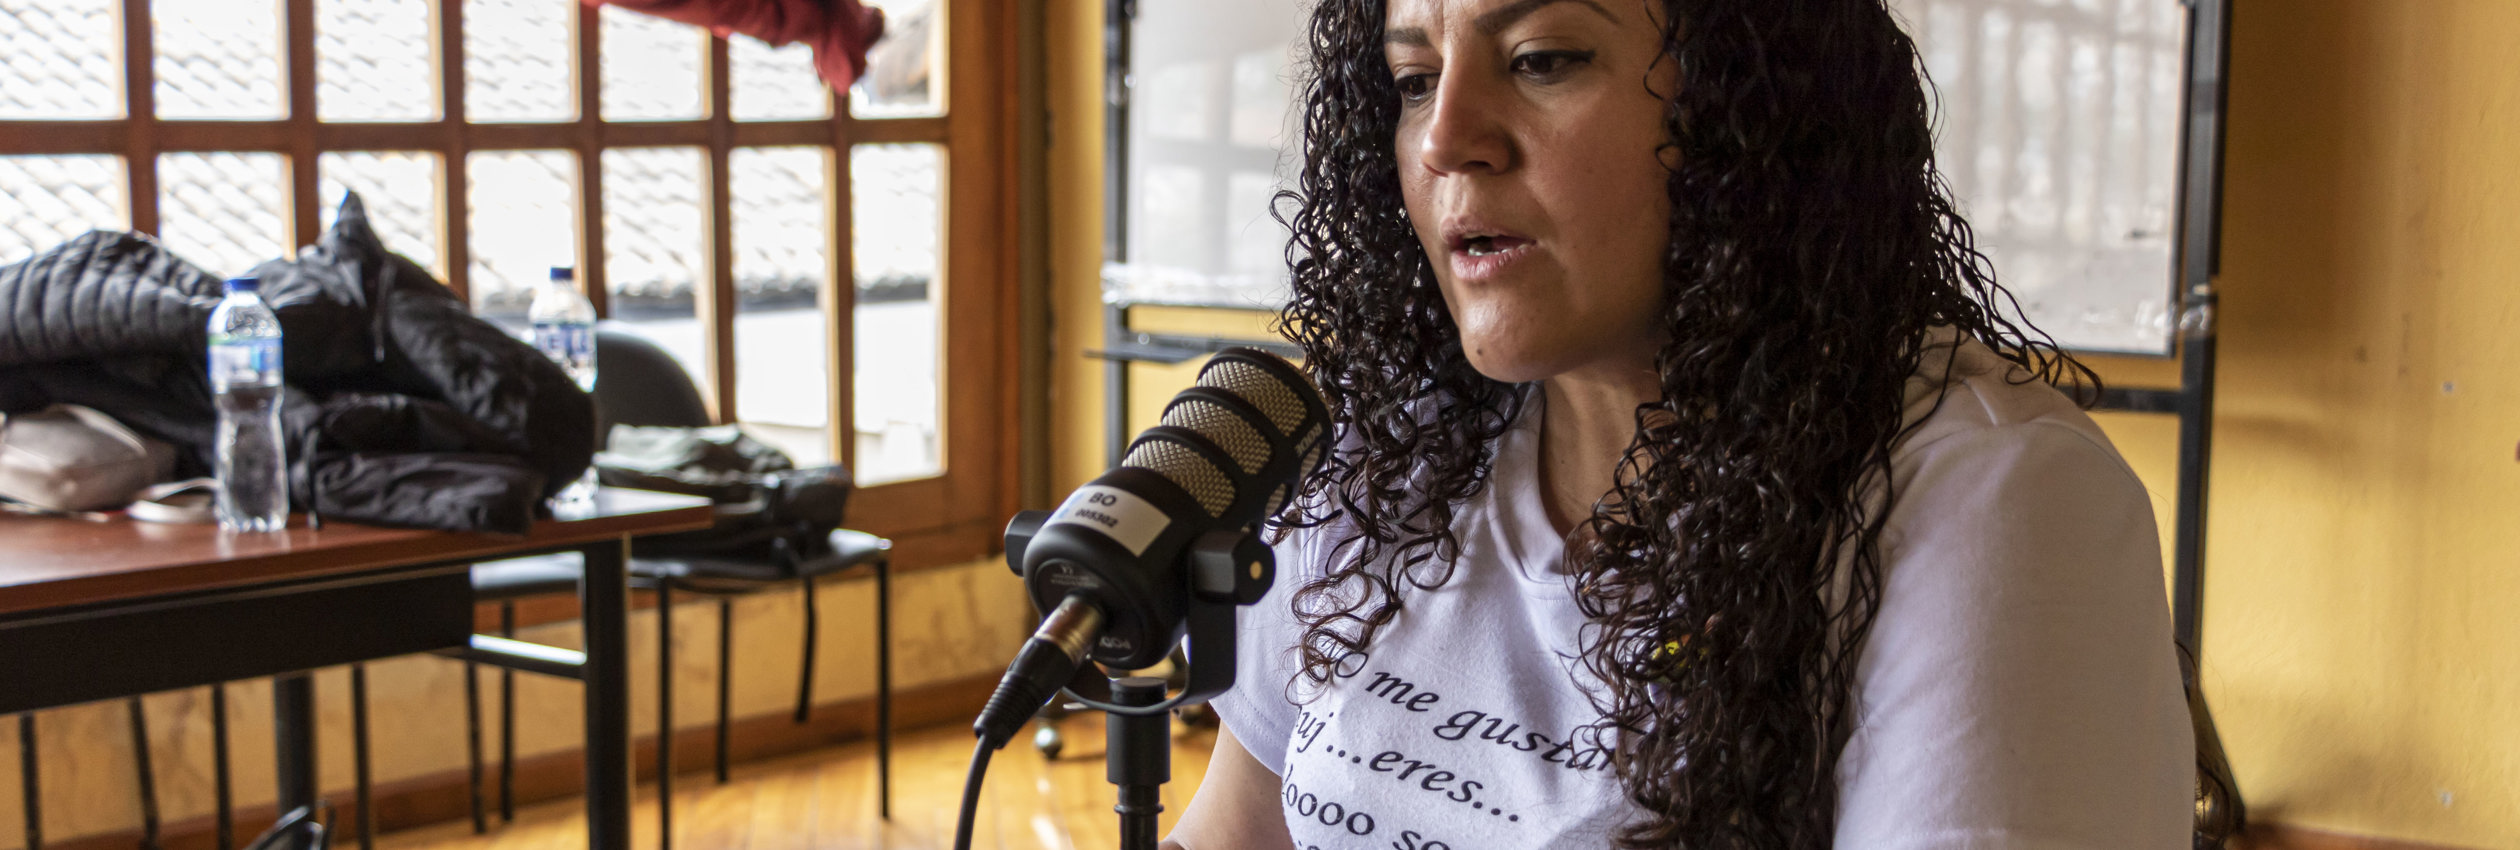 Ecuador. Venezuelan refugee and LGBTIQ+ activist, Yeraldine Cabrera, records a podcast